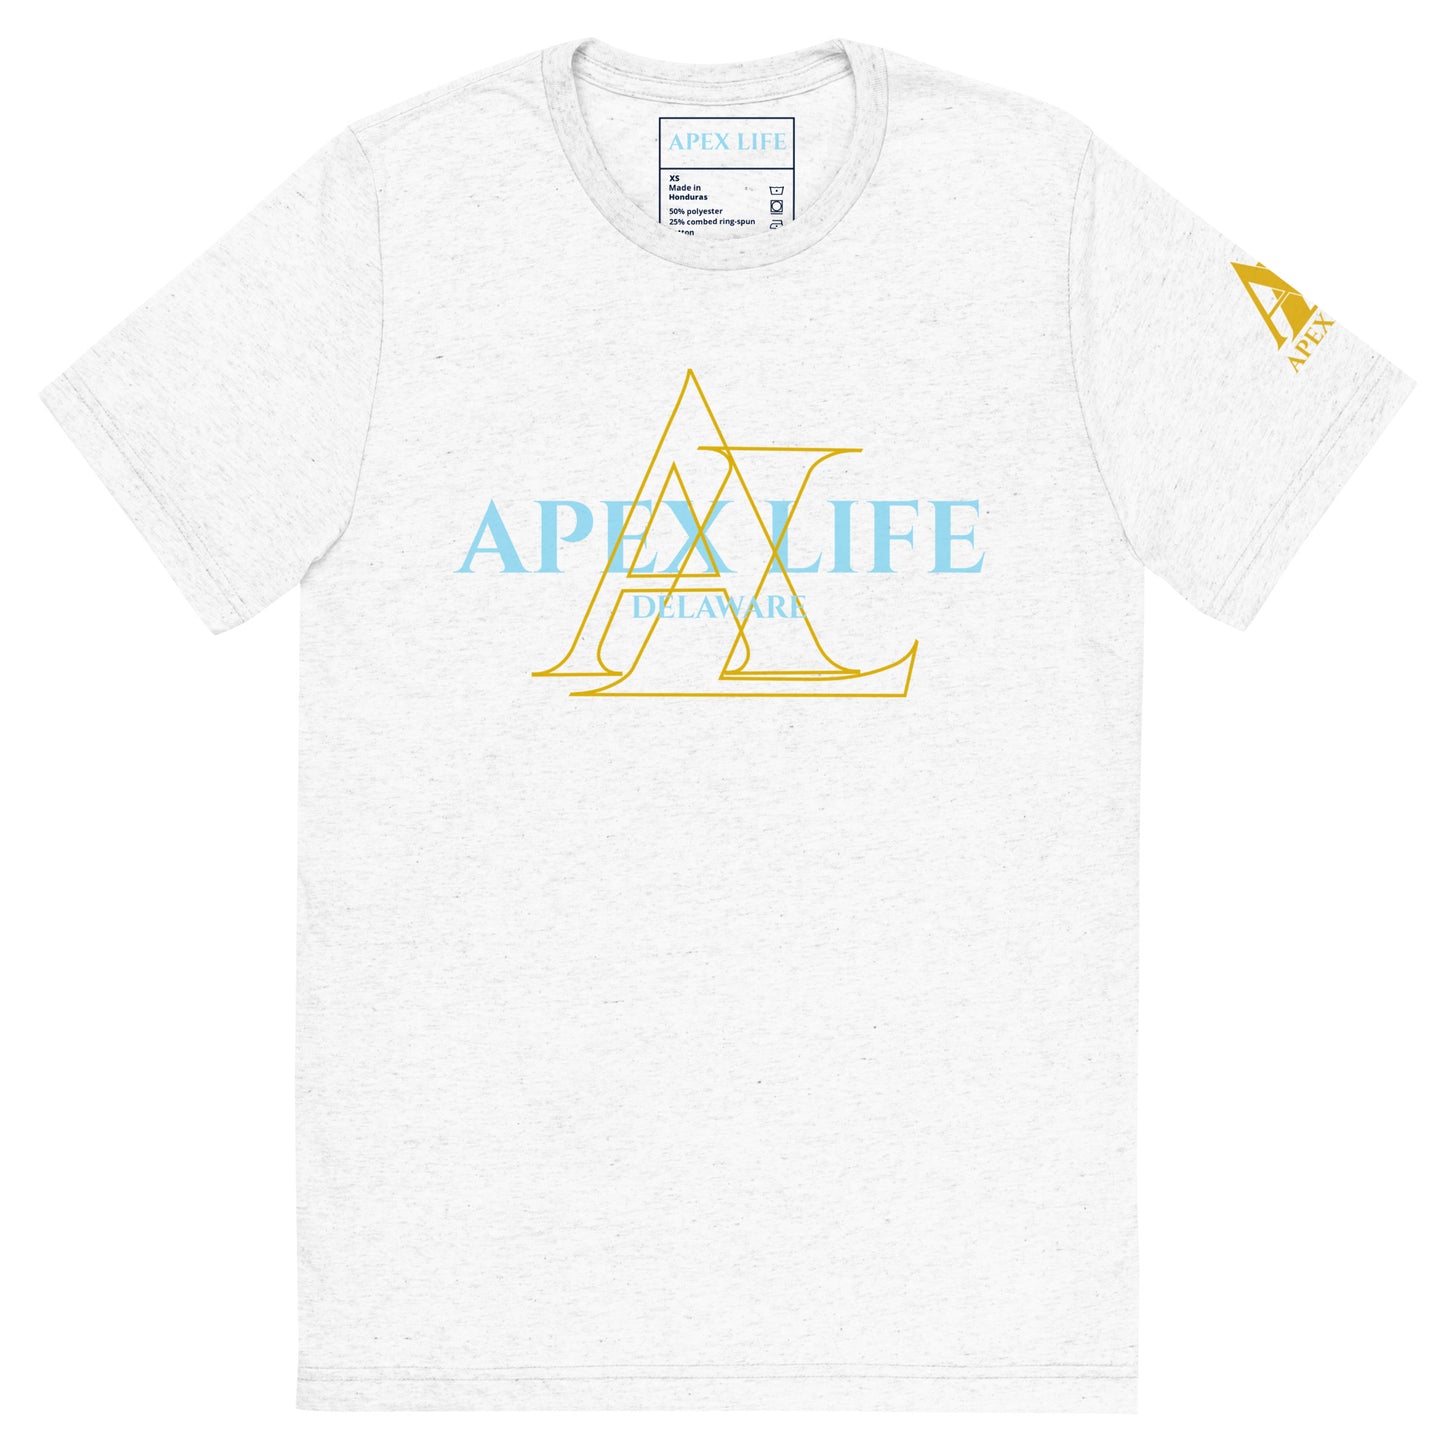 Apex Life® Delaware Tri-blend T